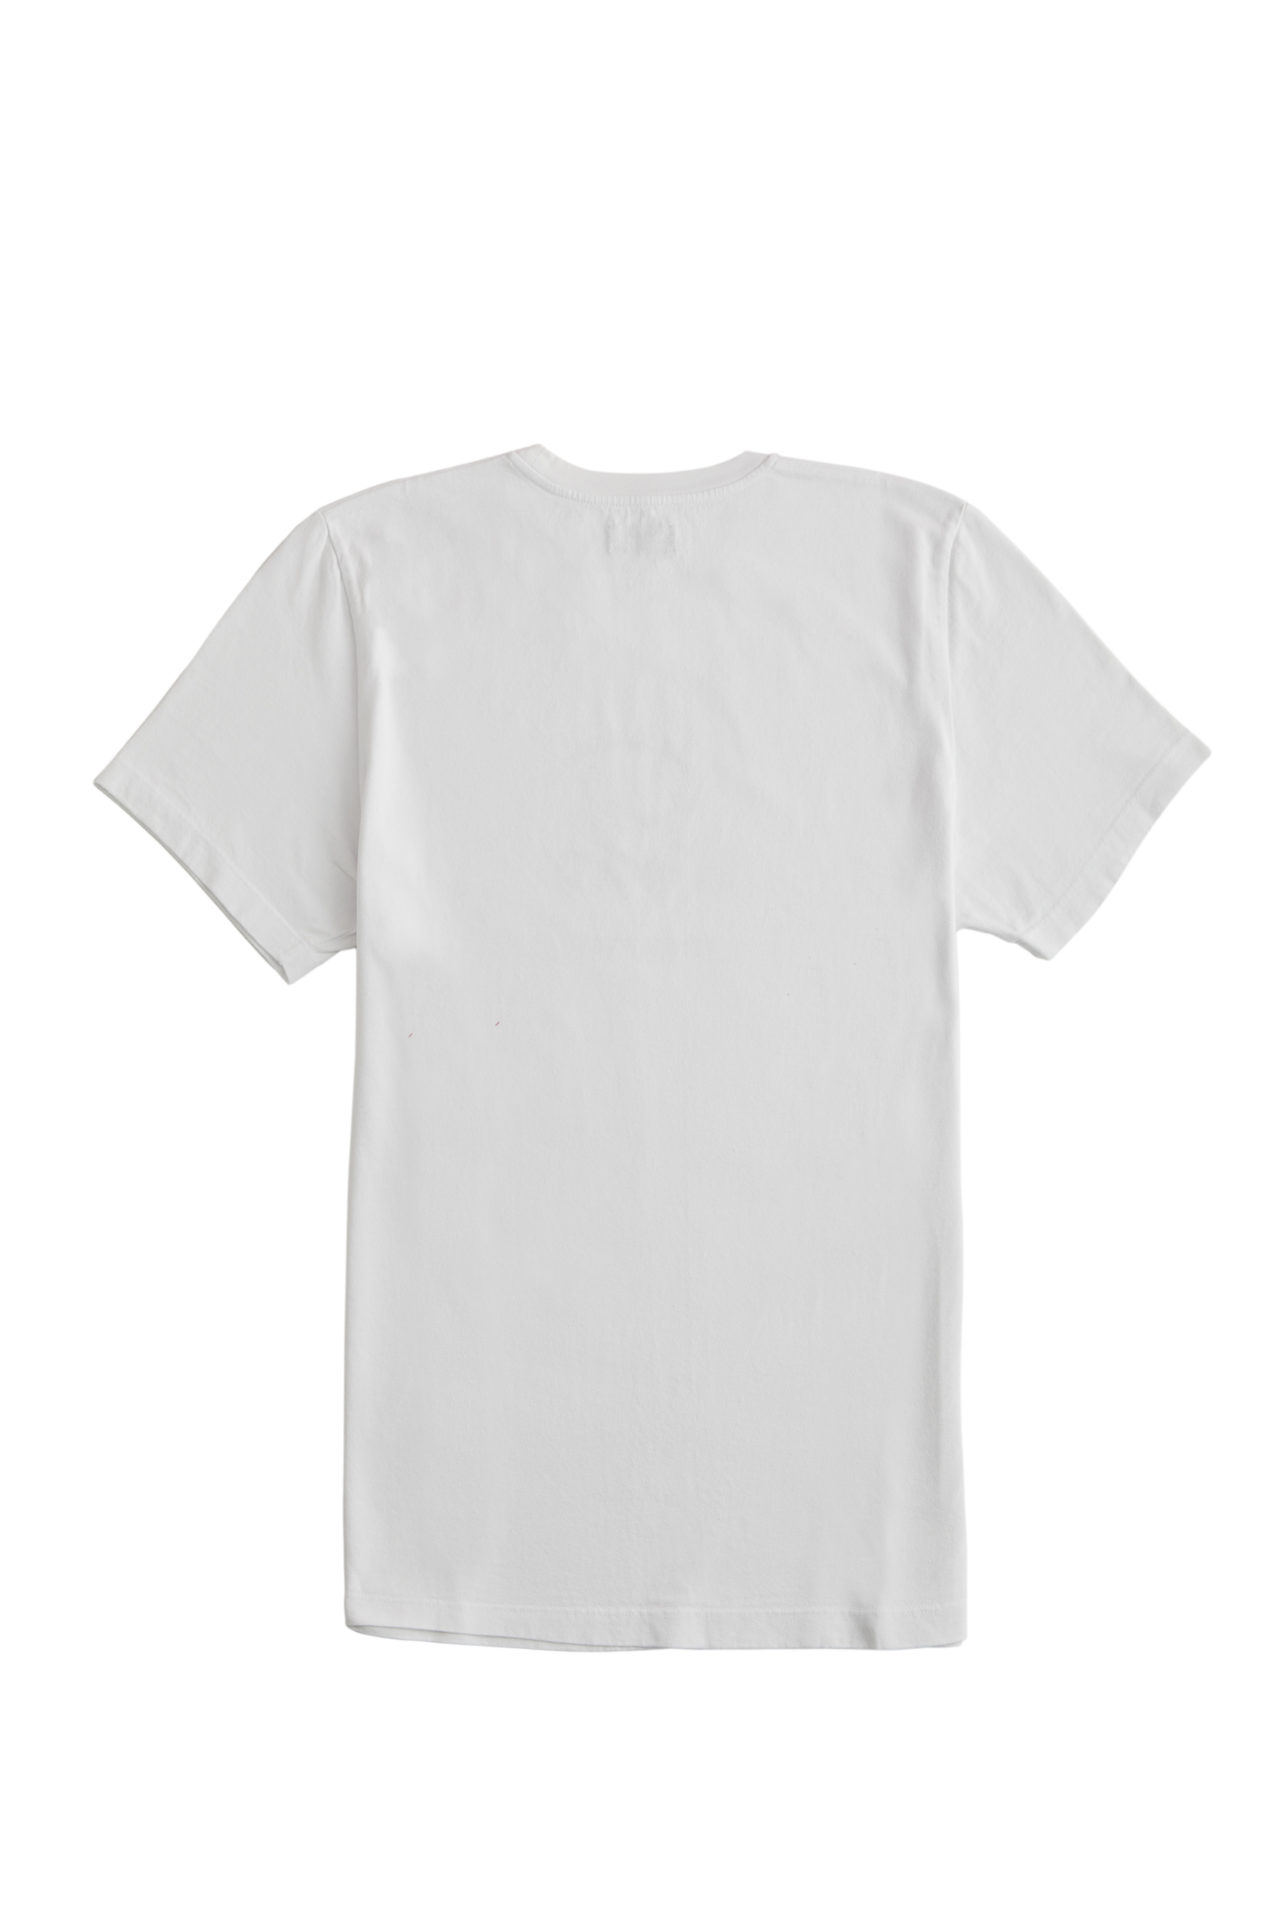 Plain White T Shirt Back